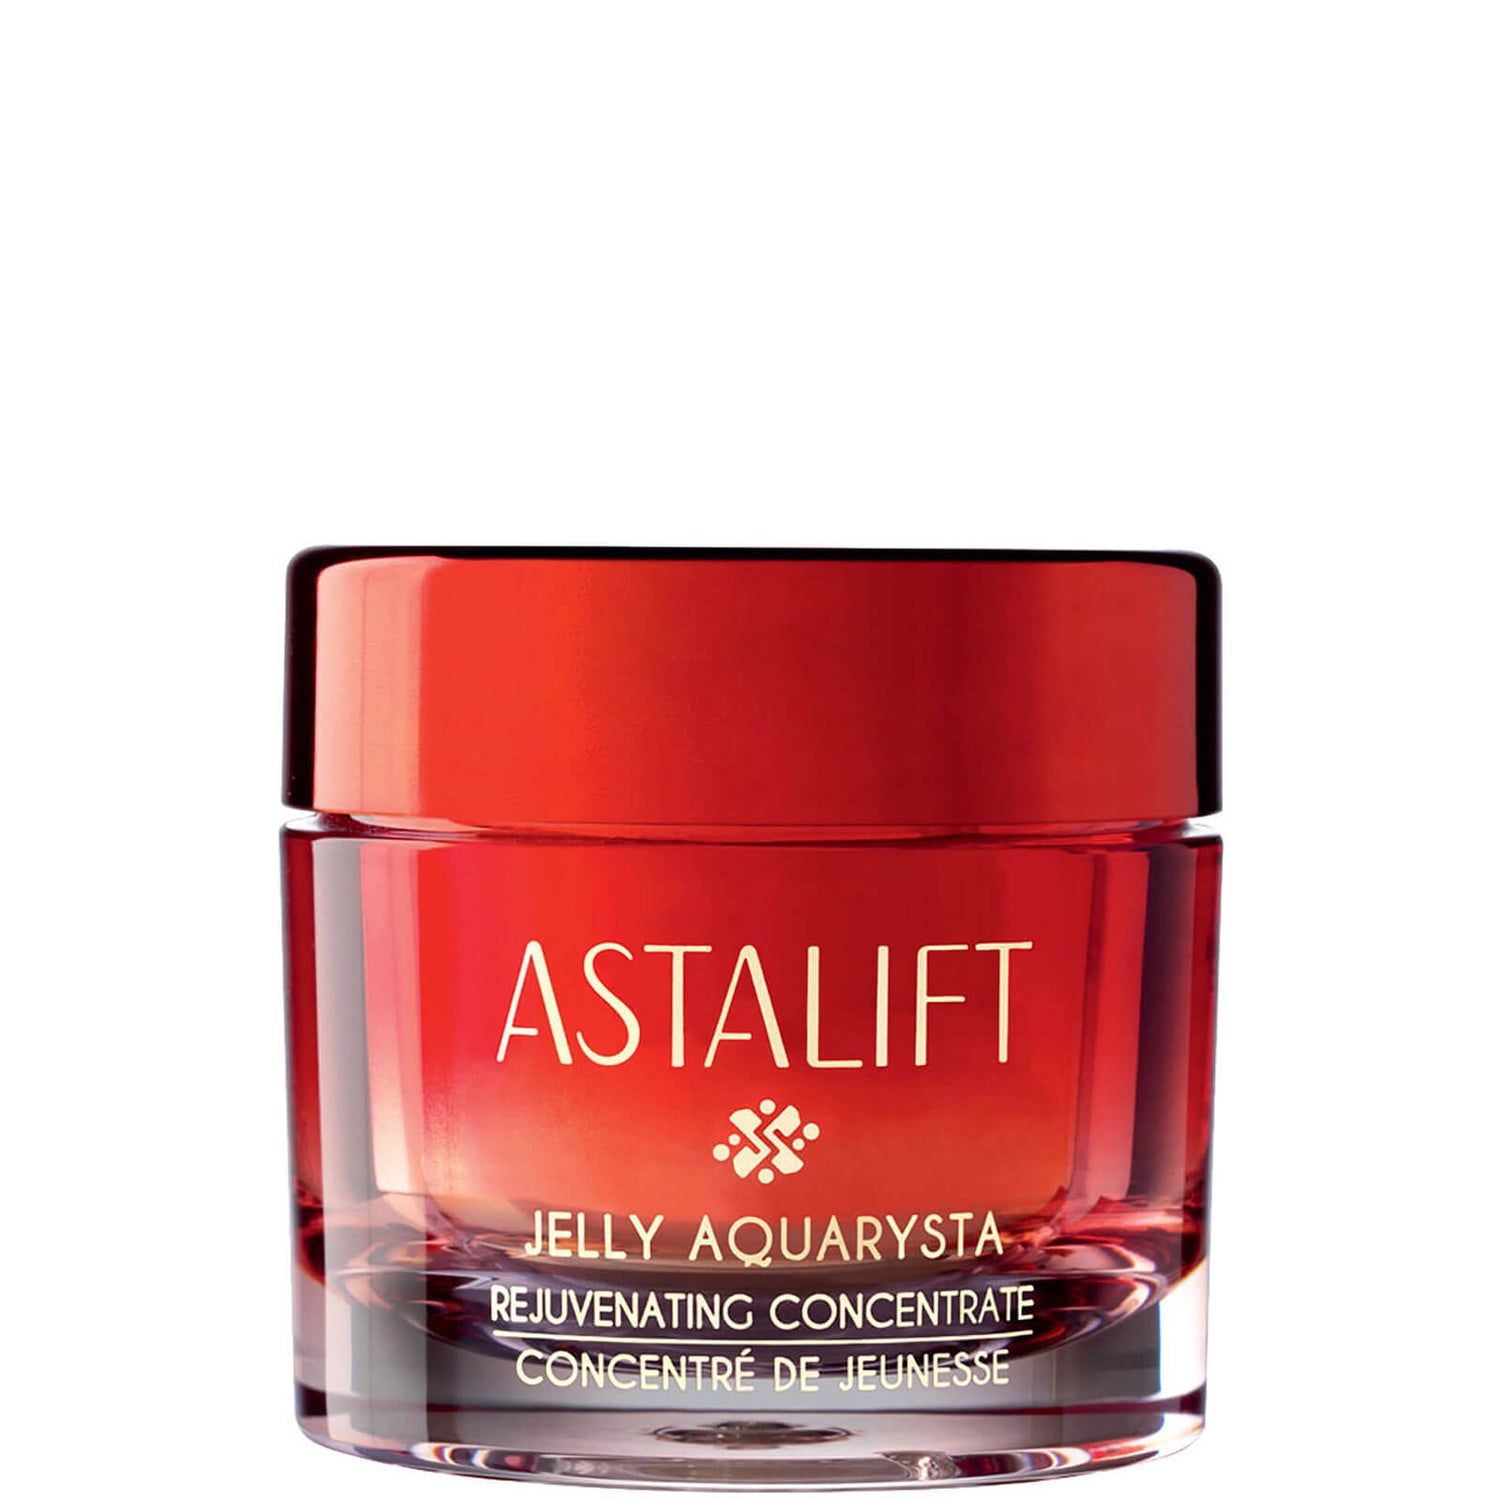 Astalift Jelly Aquarysta Siero concentrato ringiovanente (60g)